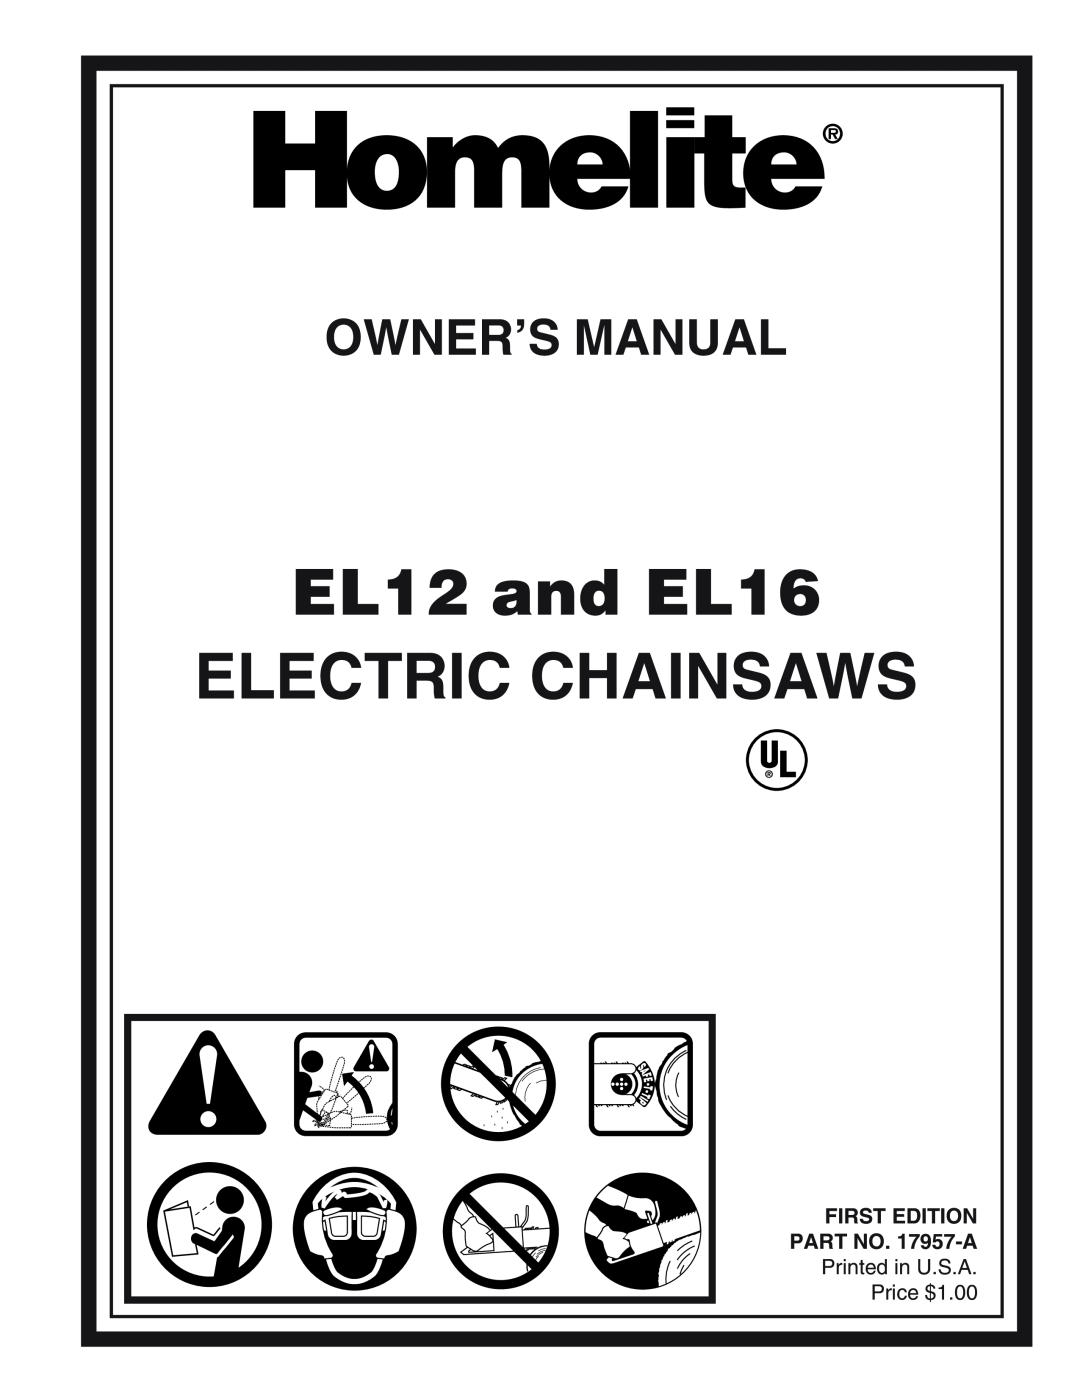 Homelite owner manual Printed in U.S.A Price $1.00, EL12 and EL16 ELECTRIC CHAINSAWS, Ownerõs Manual, Warning Icon 